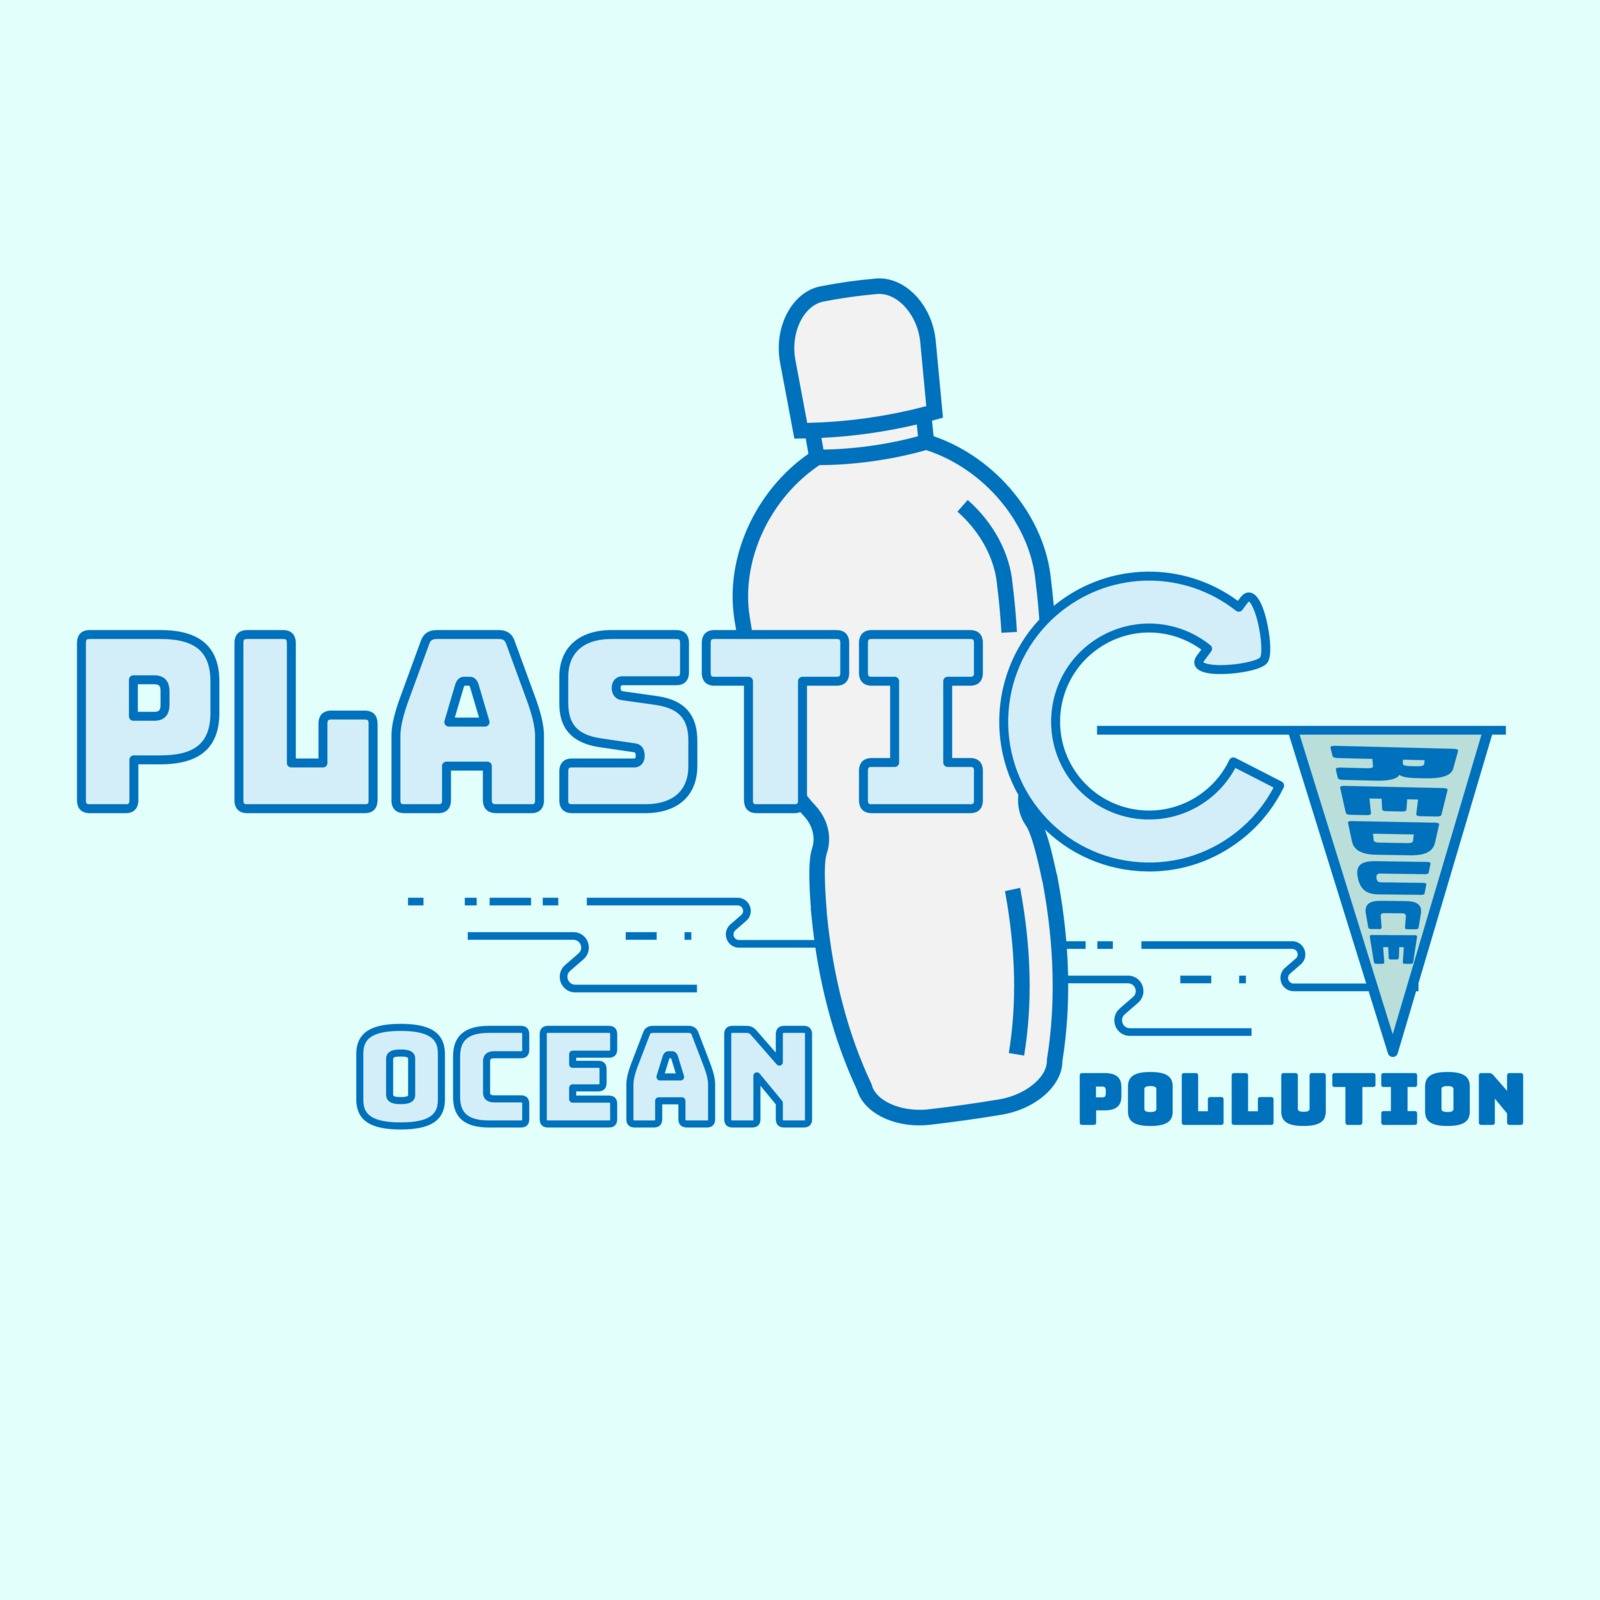 Plastic Recycling by Chiamsakul